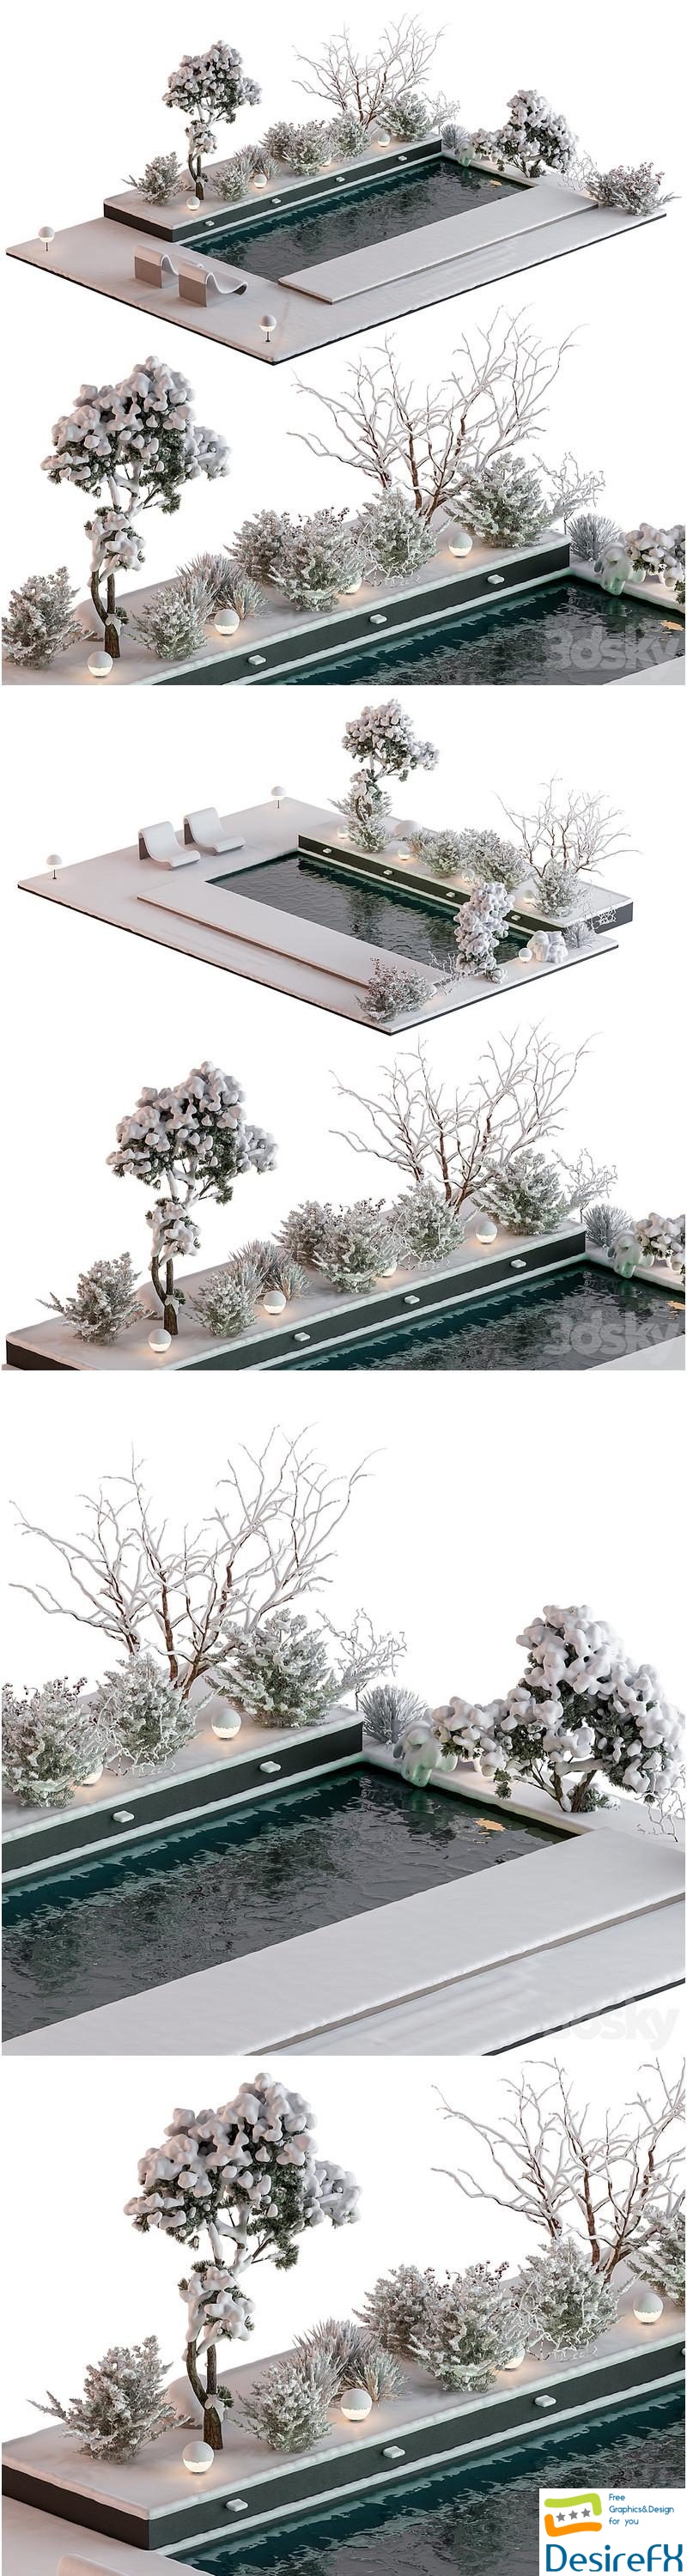 Snowy Scene with Pool - Set 76 3D Model